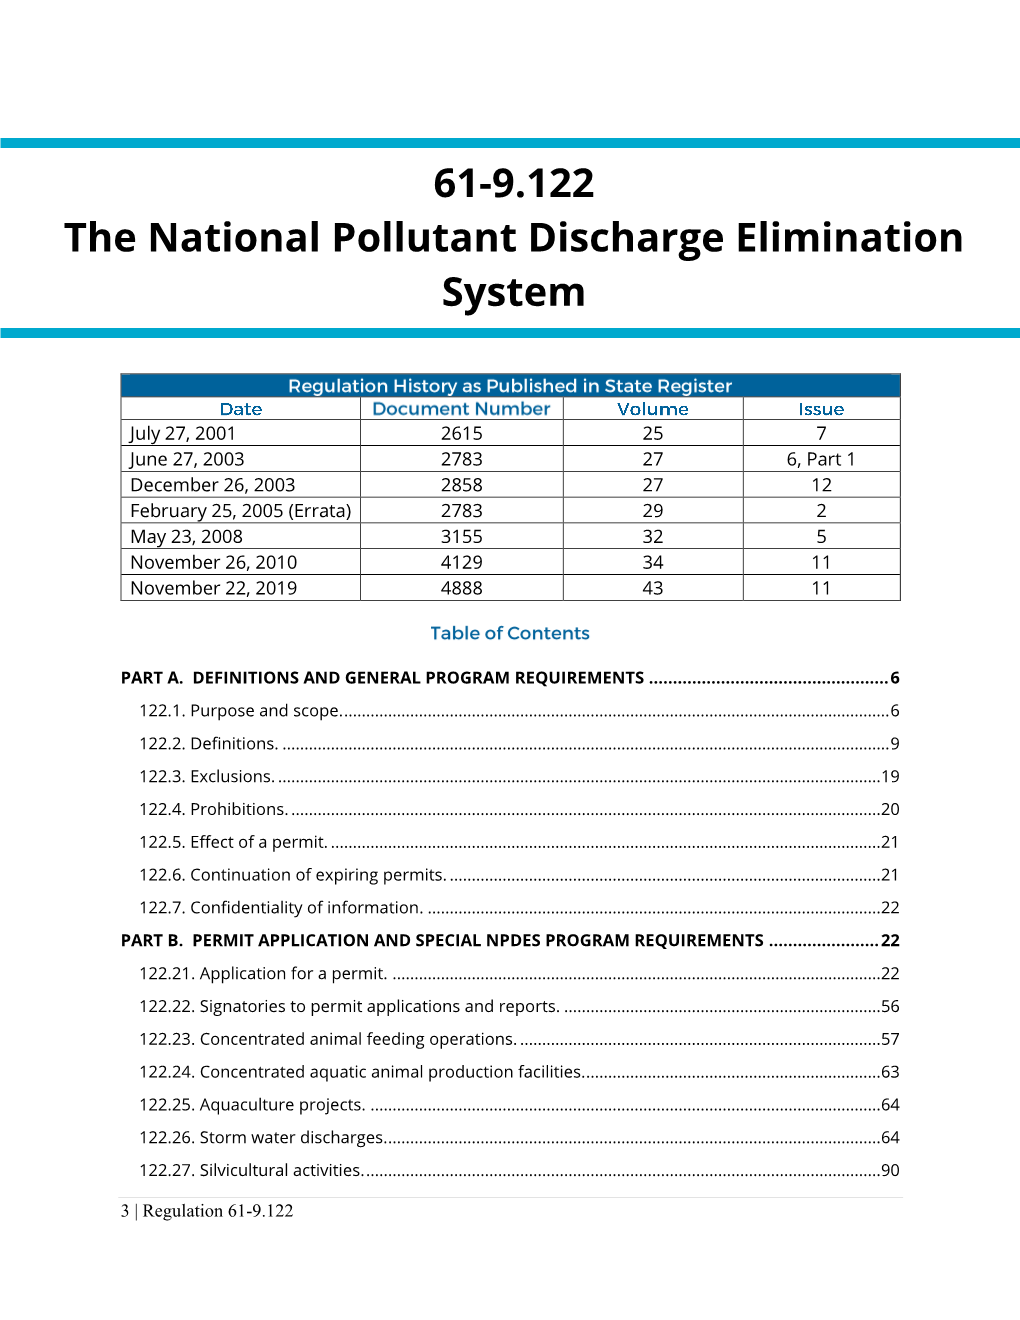 61-9.122 the National Pollutant Discharge Elimination System